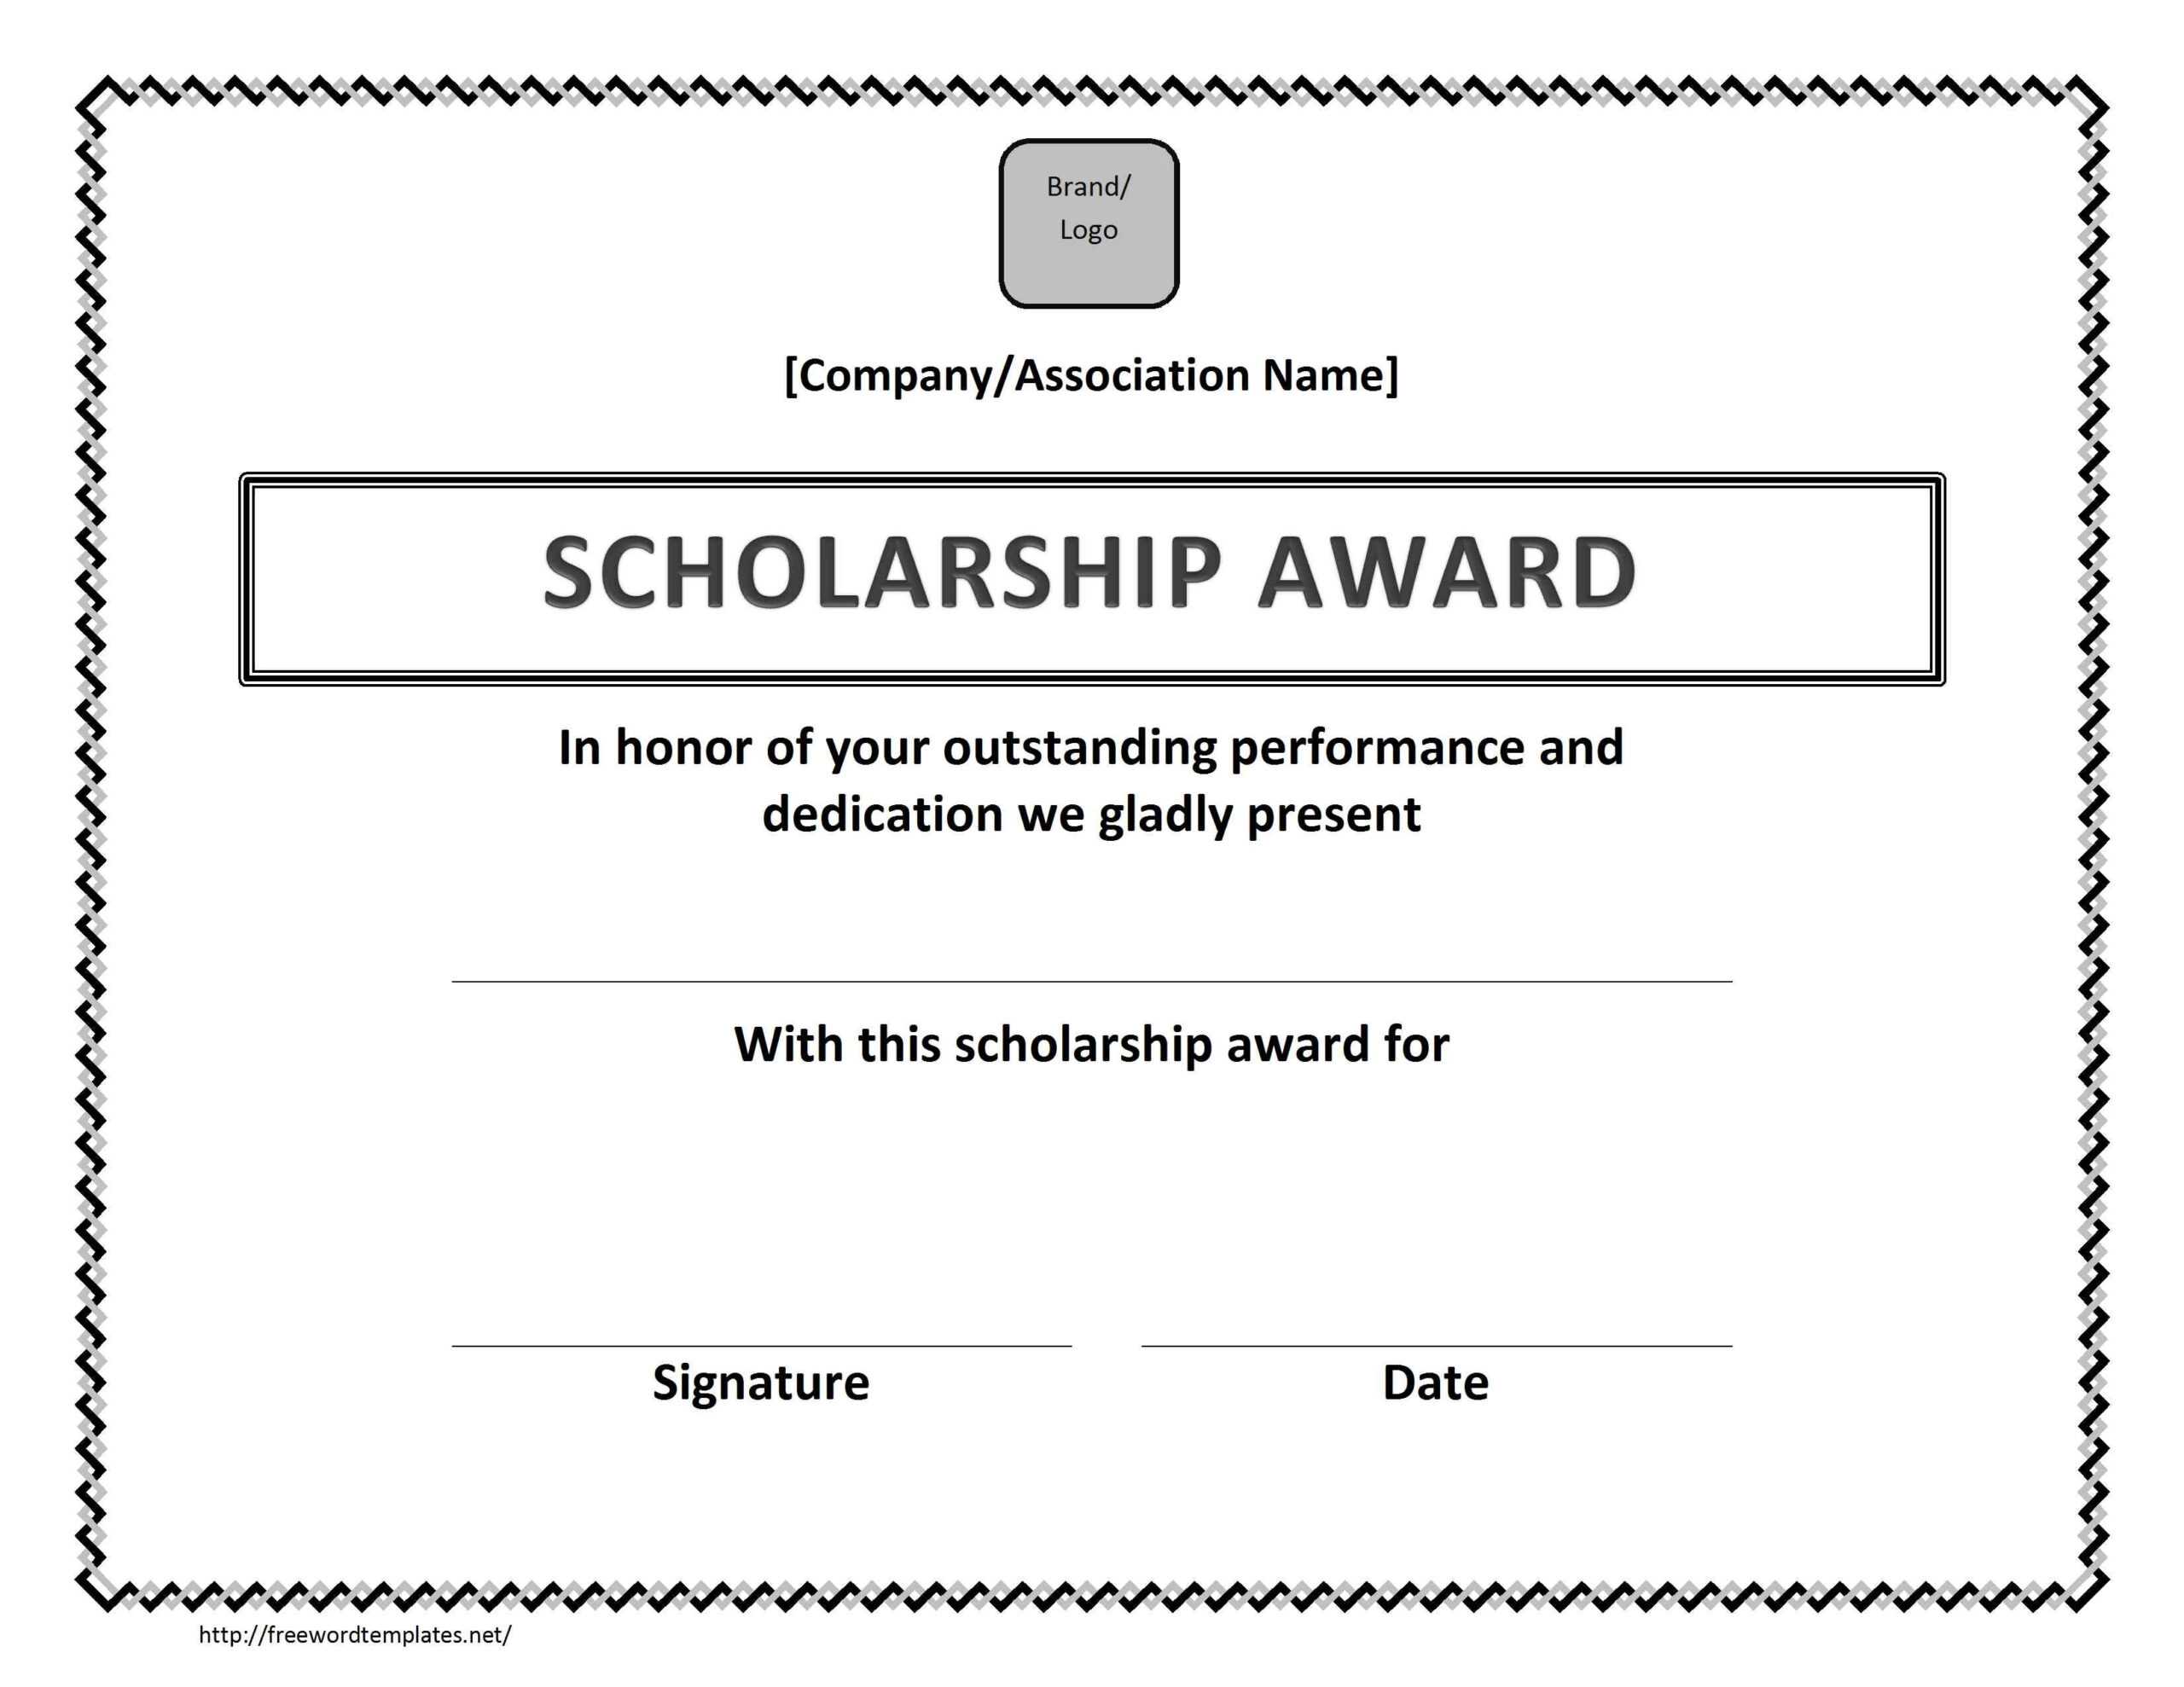 Scholarship Award Certificate Template For Microsoft Word Award Certificate Template